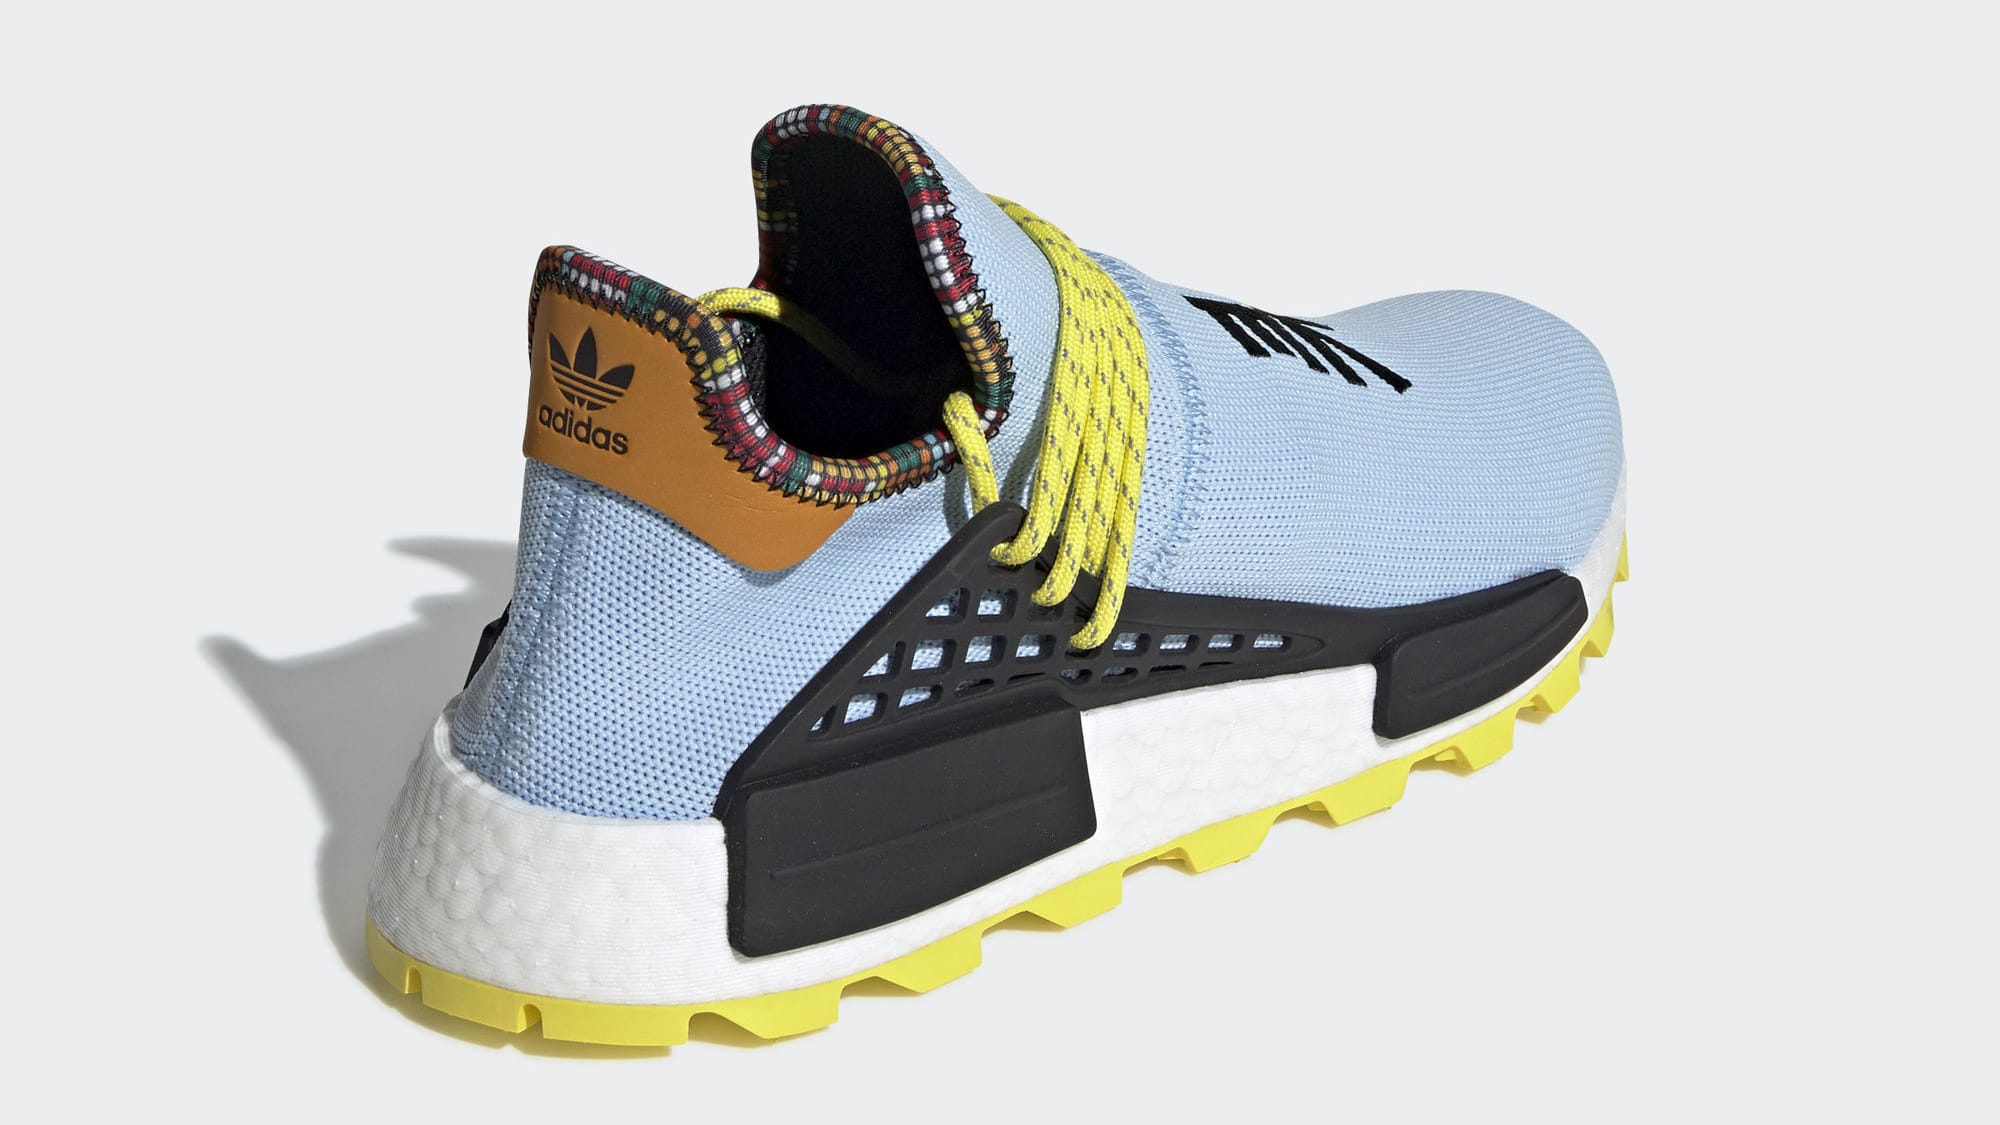 Adidas Adidas Human Race NMD Trail Pharrell Williams Inspiration